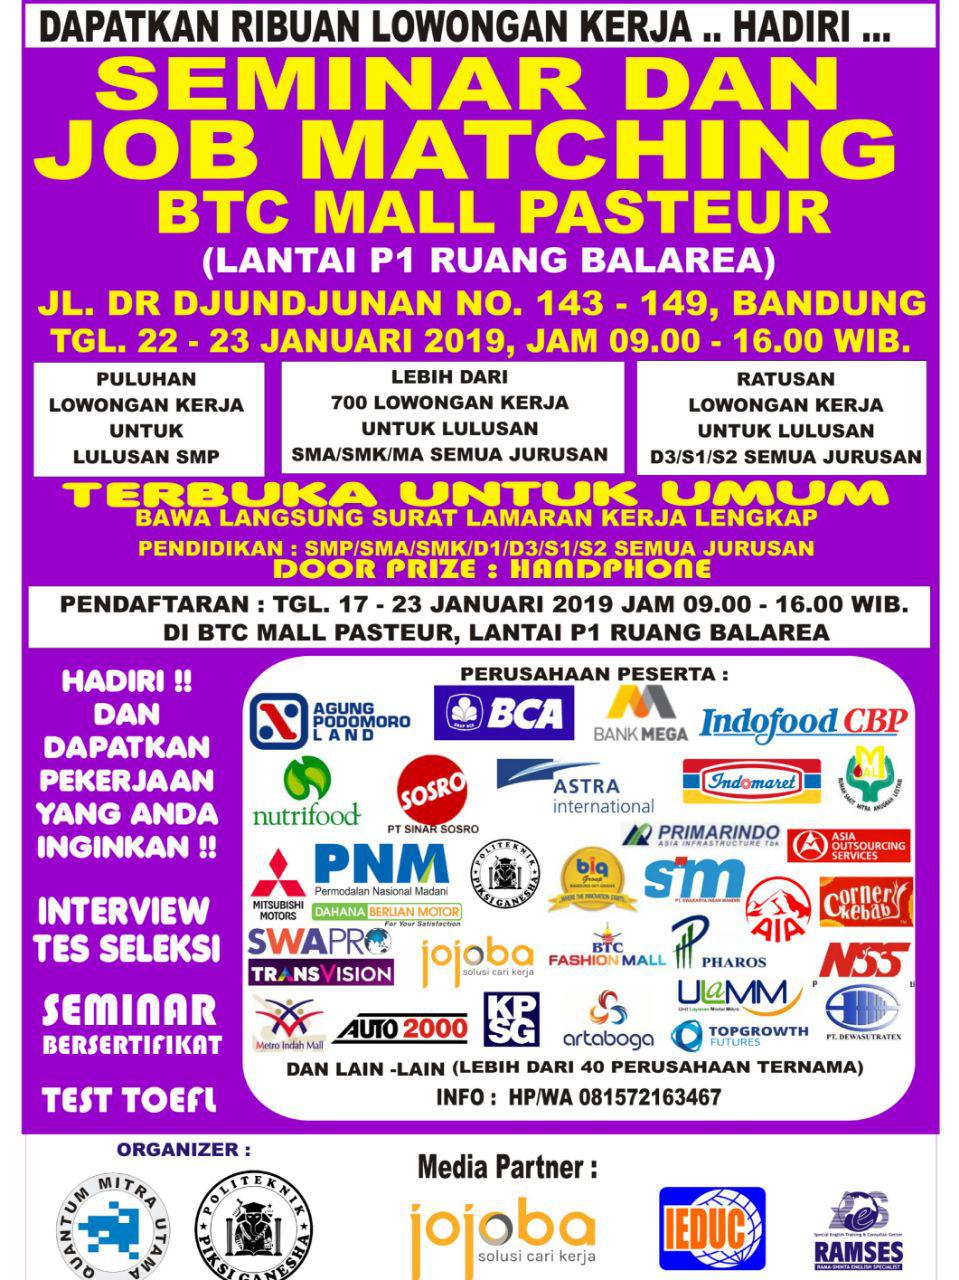 Seminar Dan Job Matching BTC Mall Pasteur Bandung 22 - 23 Januari 2019